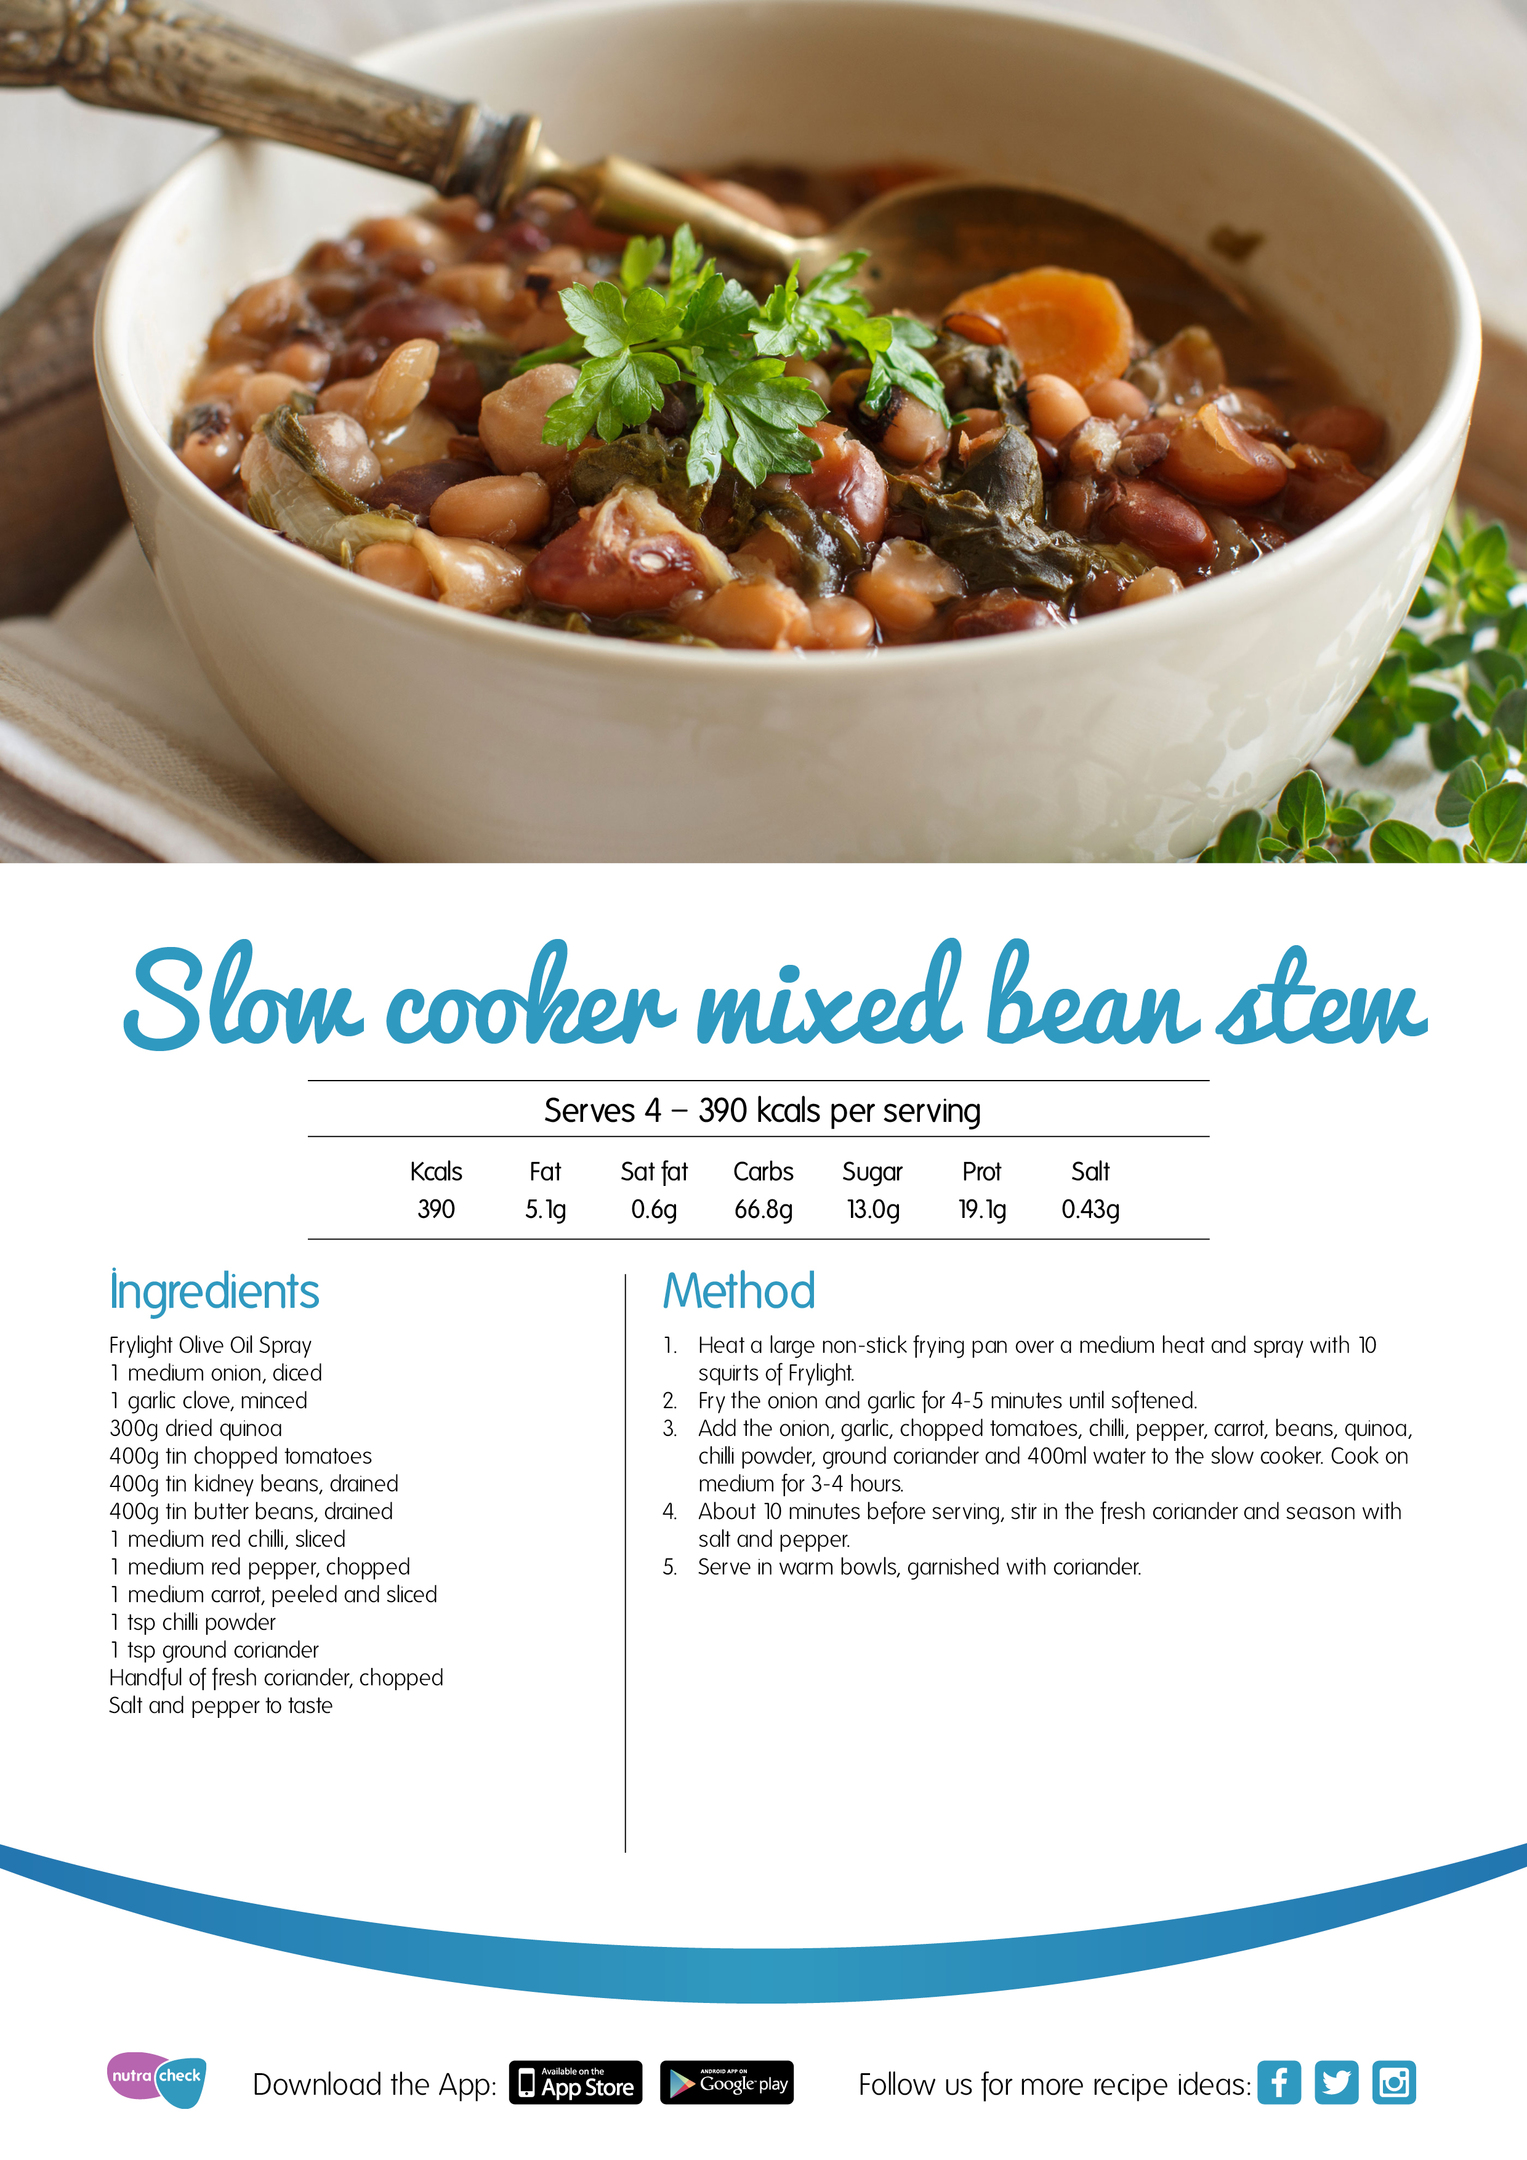 Slow cooker mixed bean stew